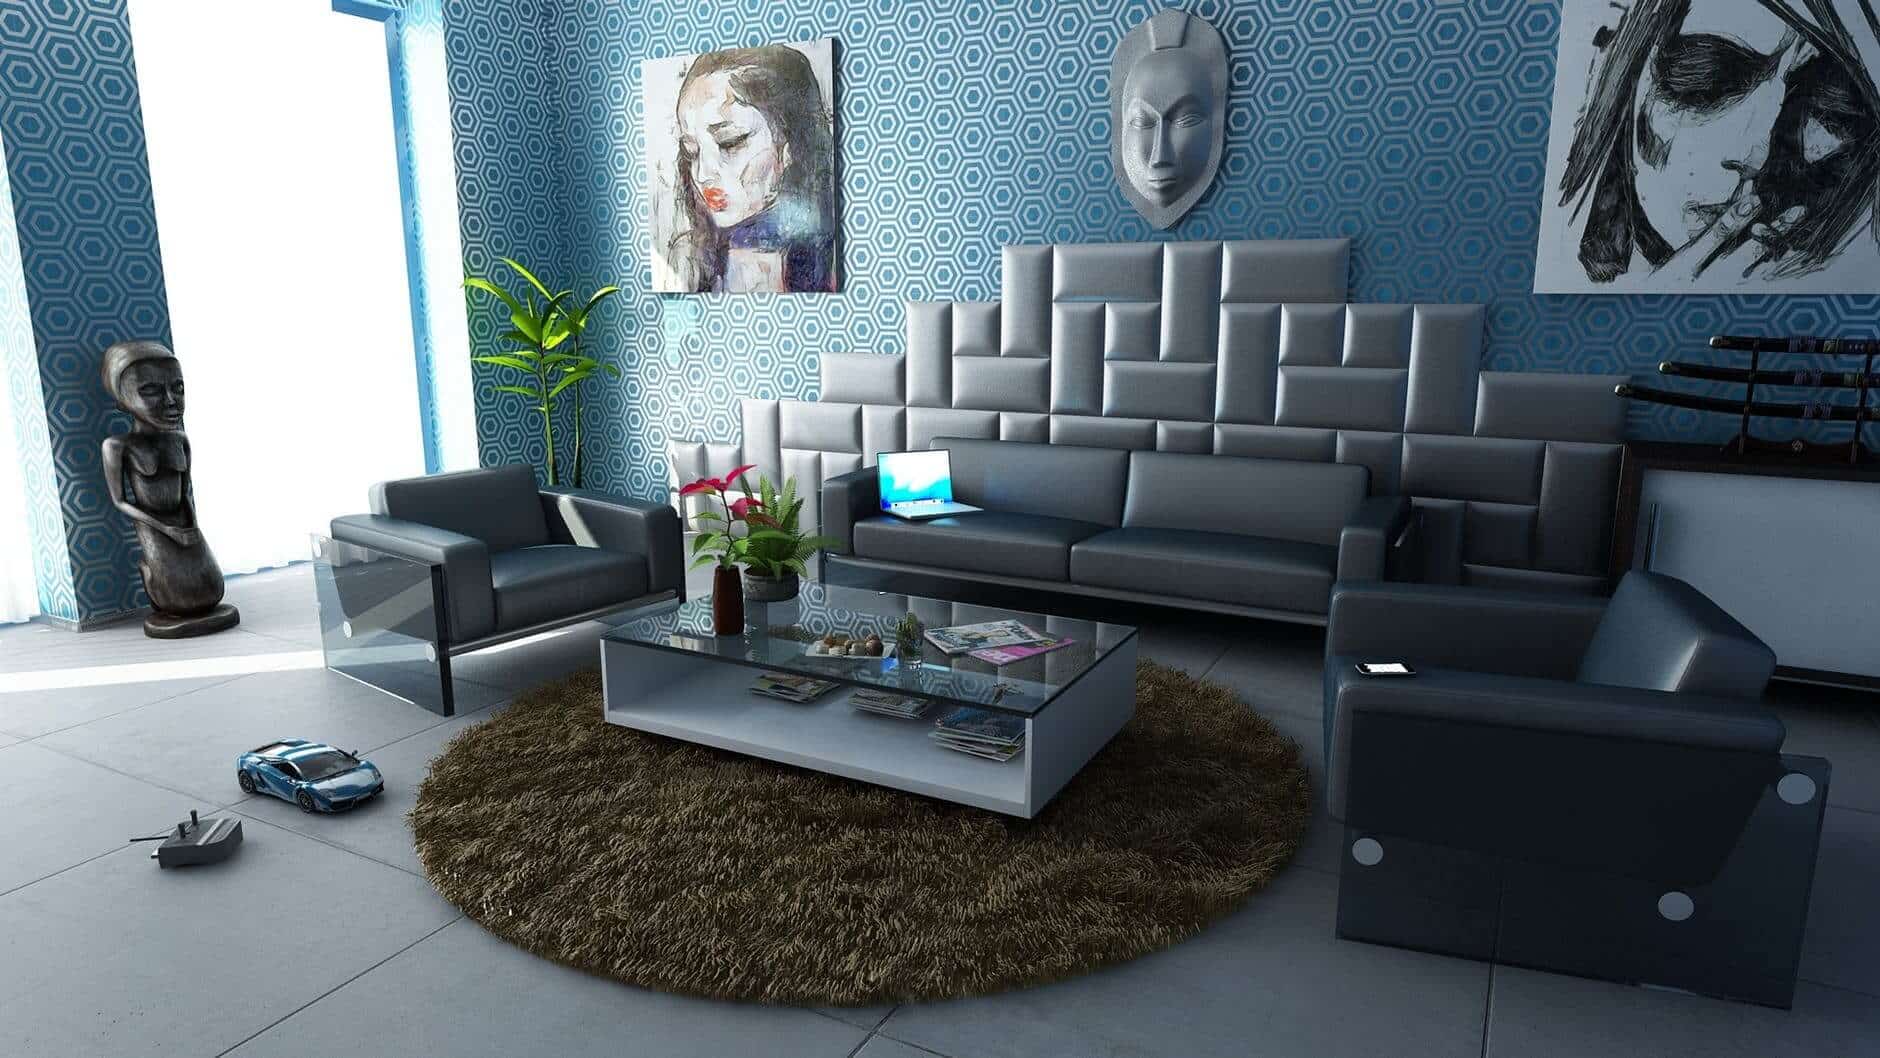 Rug Designs For Living Room 13